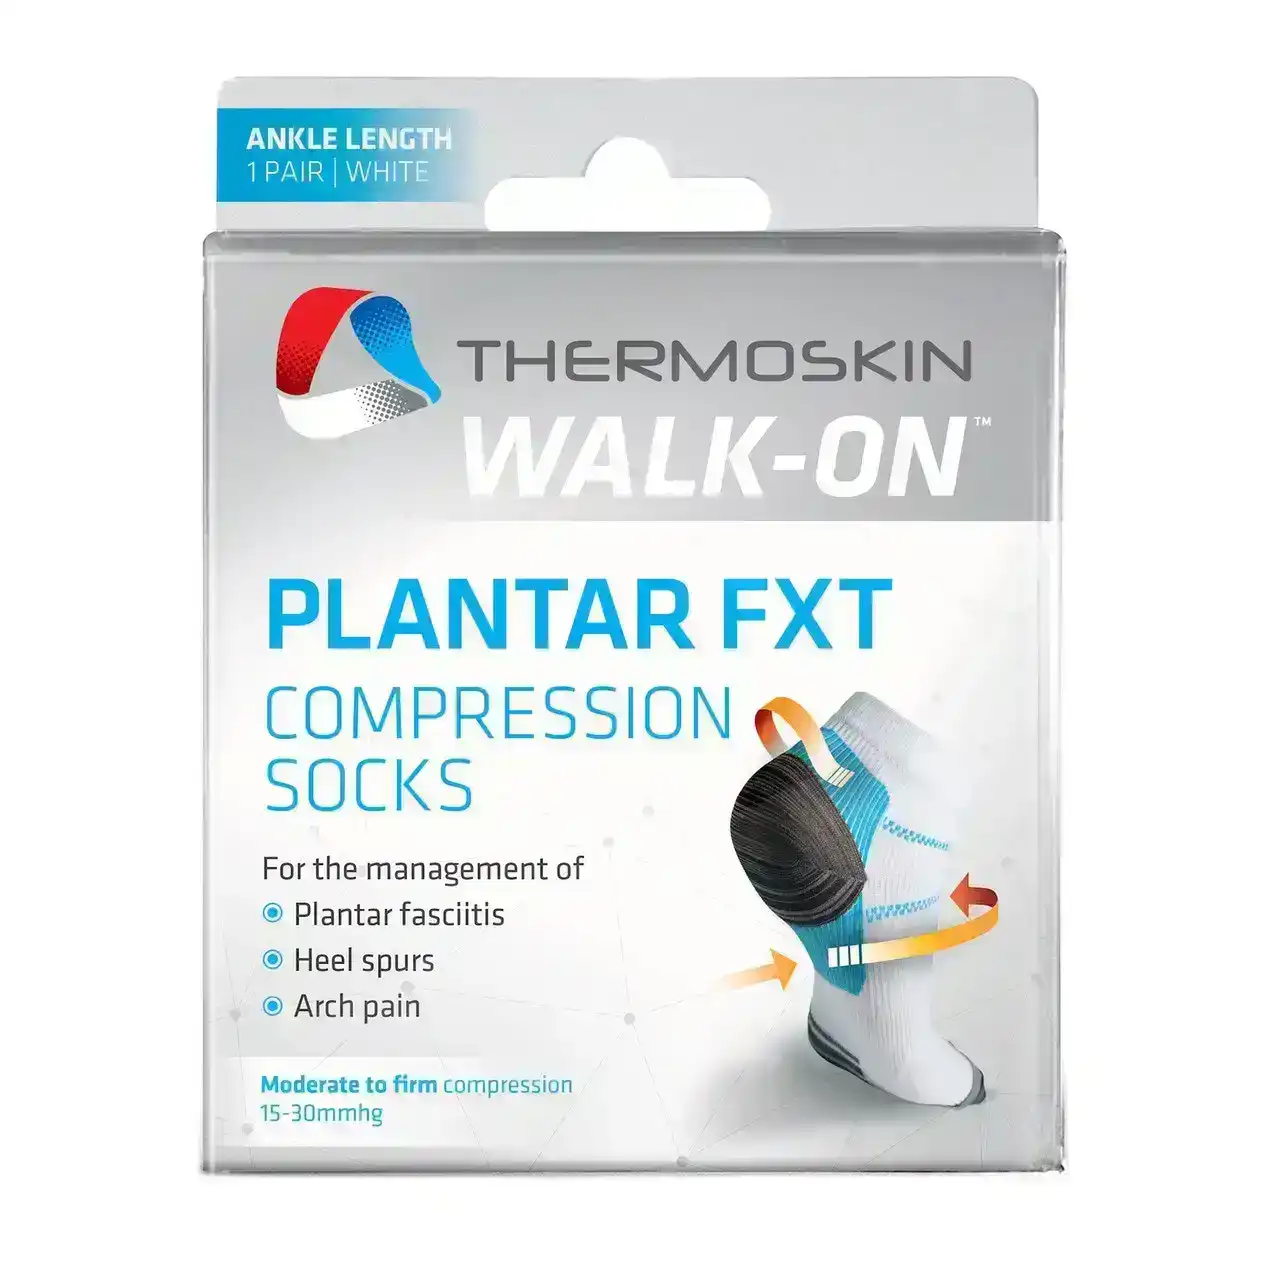 Thermoskin Walk-On Plantar FXT Compression Socks (White Ankle Length)